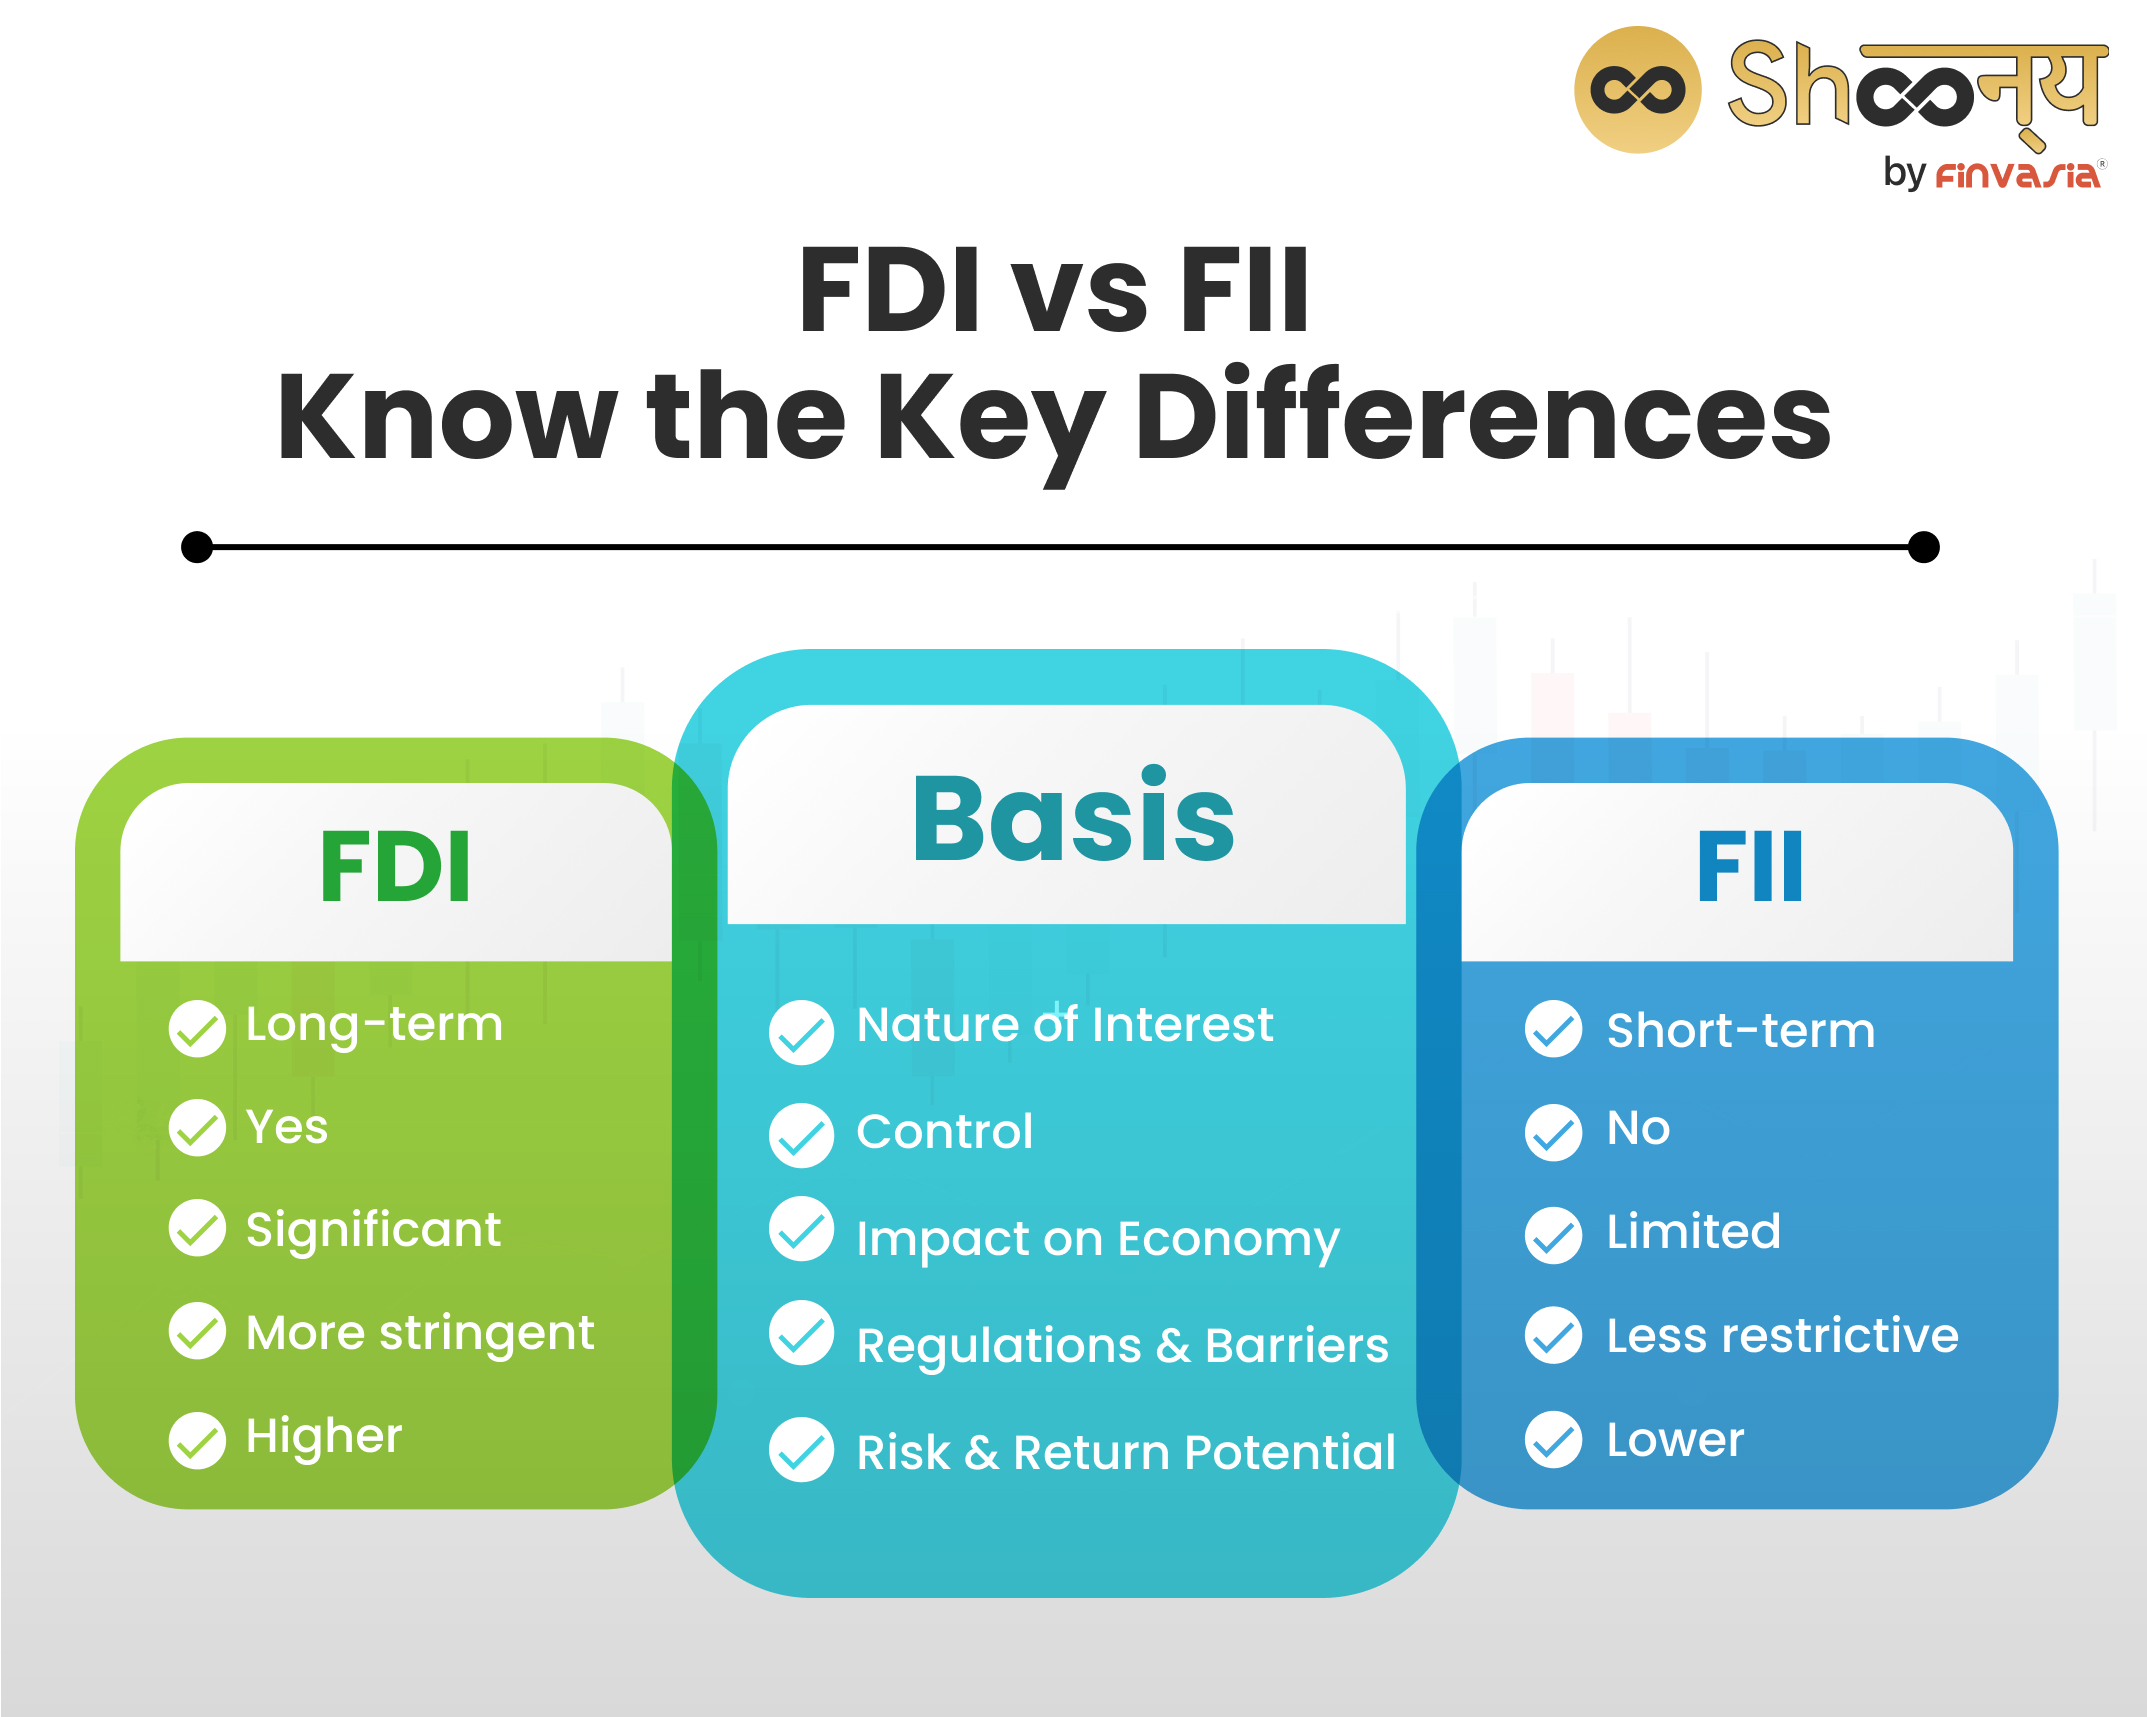 FDI vs FII: Know the Key Differences